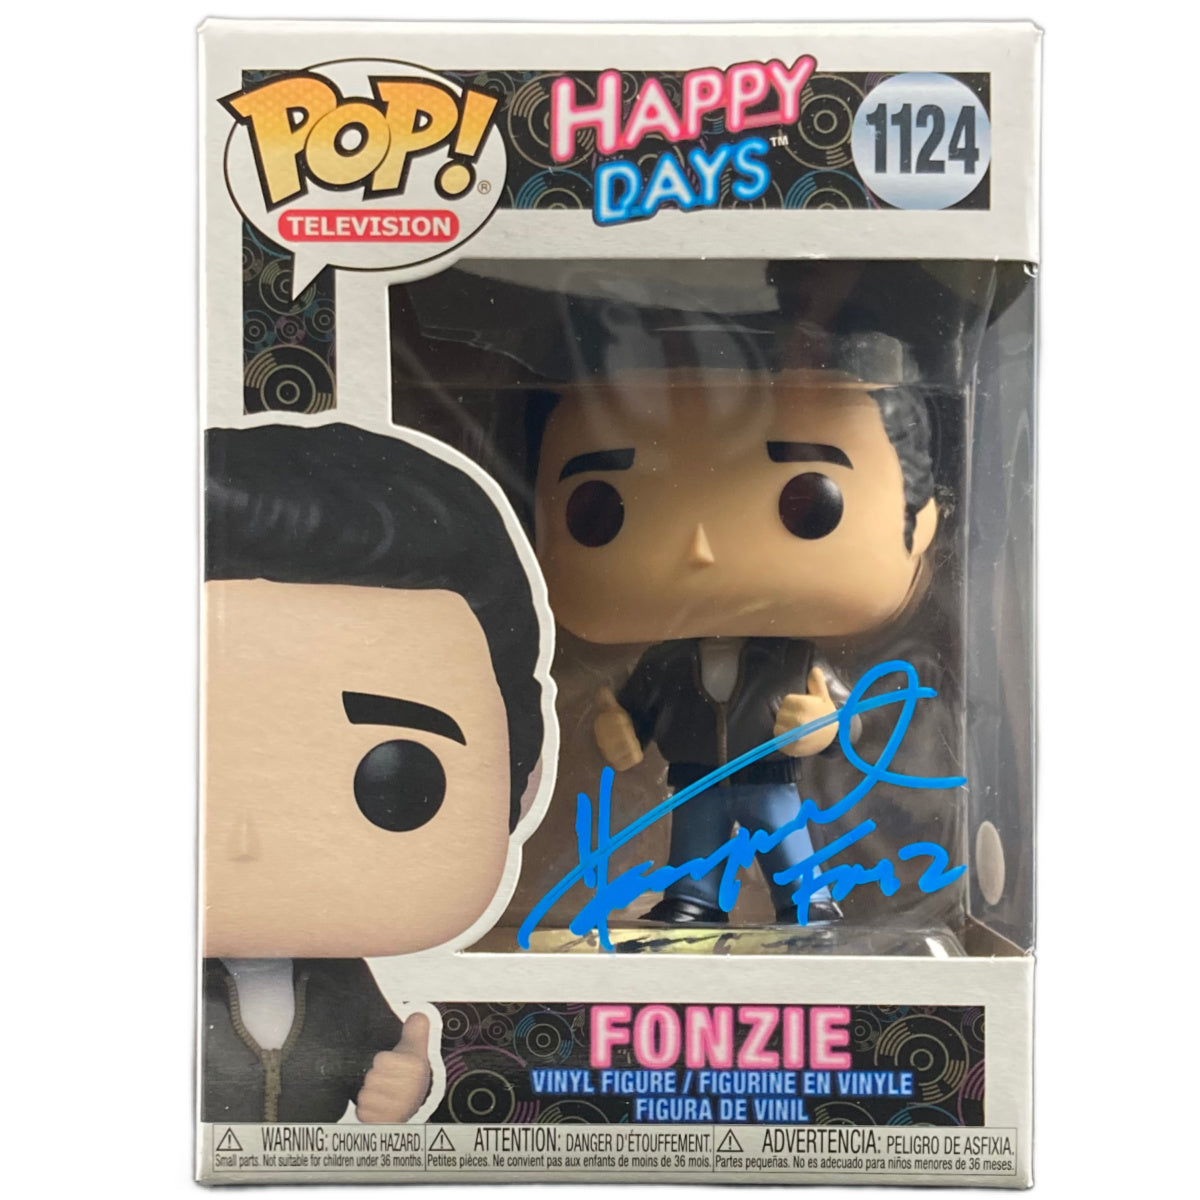 Henry Winkler Signed Funko POP Happy Days Fonzie Autographed JSA COA